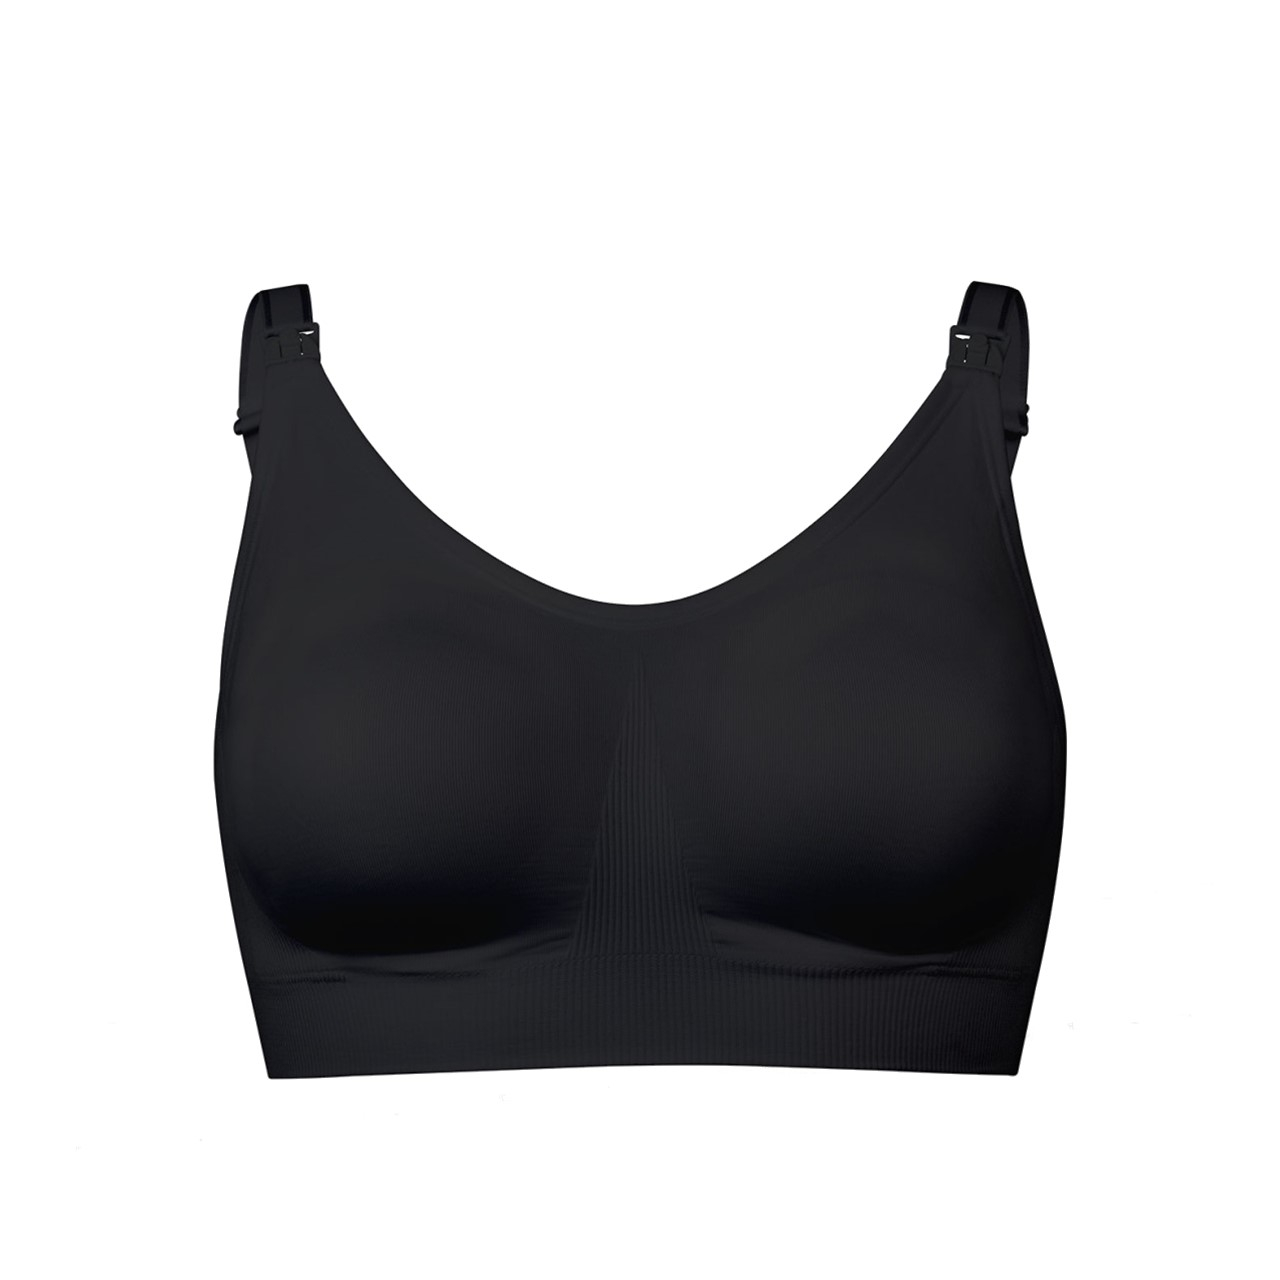 Buy Medela Ultimate BodyFit Bra Black Large Size x1 · USA